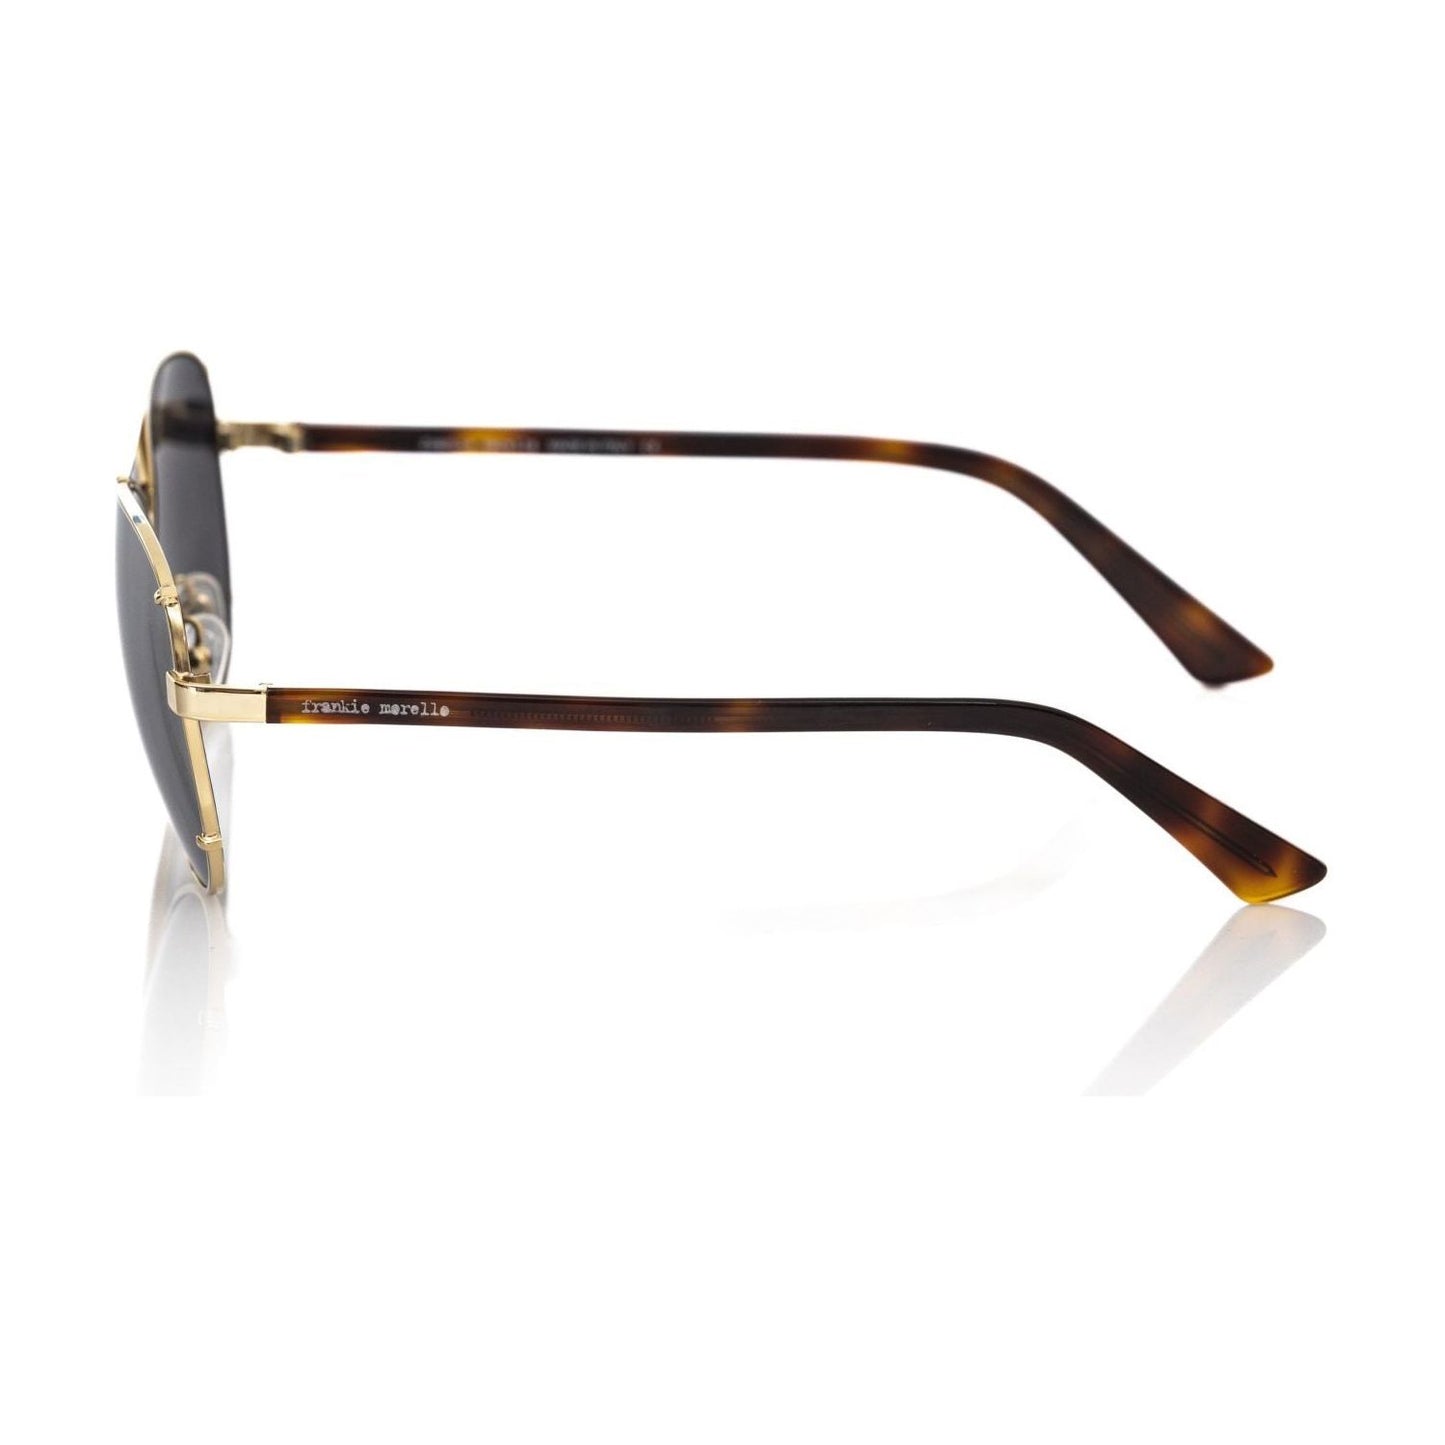 Frankie Morello Aviator Elegance Sunglasses in Gold gold-metallic-fibre-sunglasses